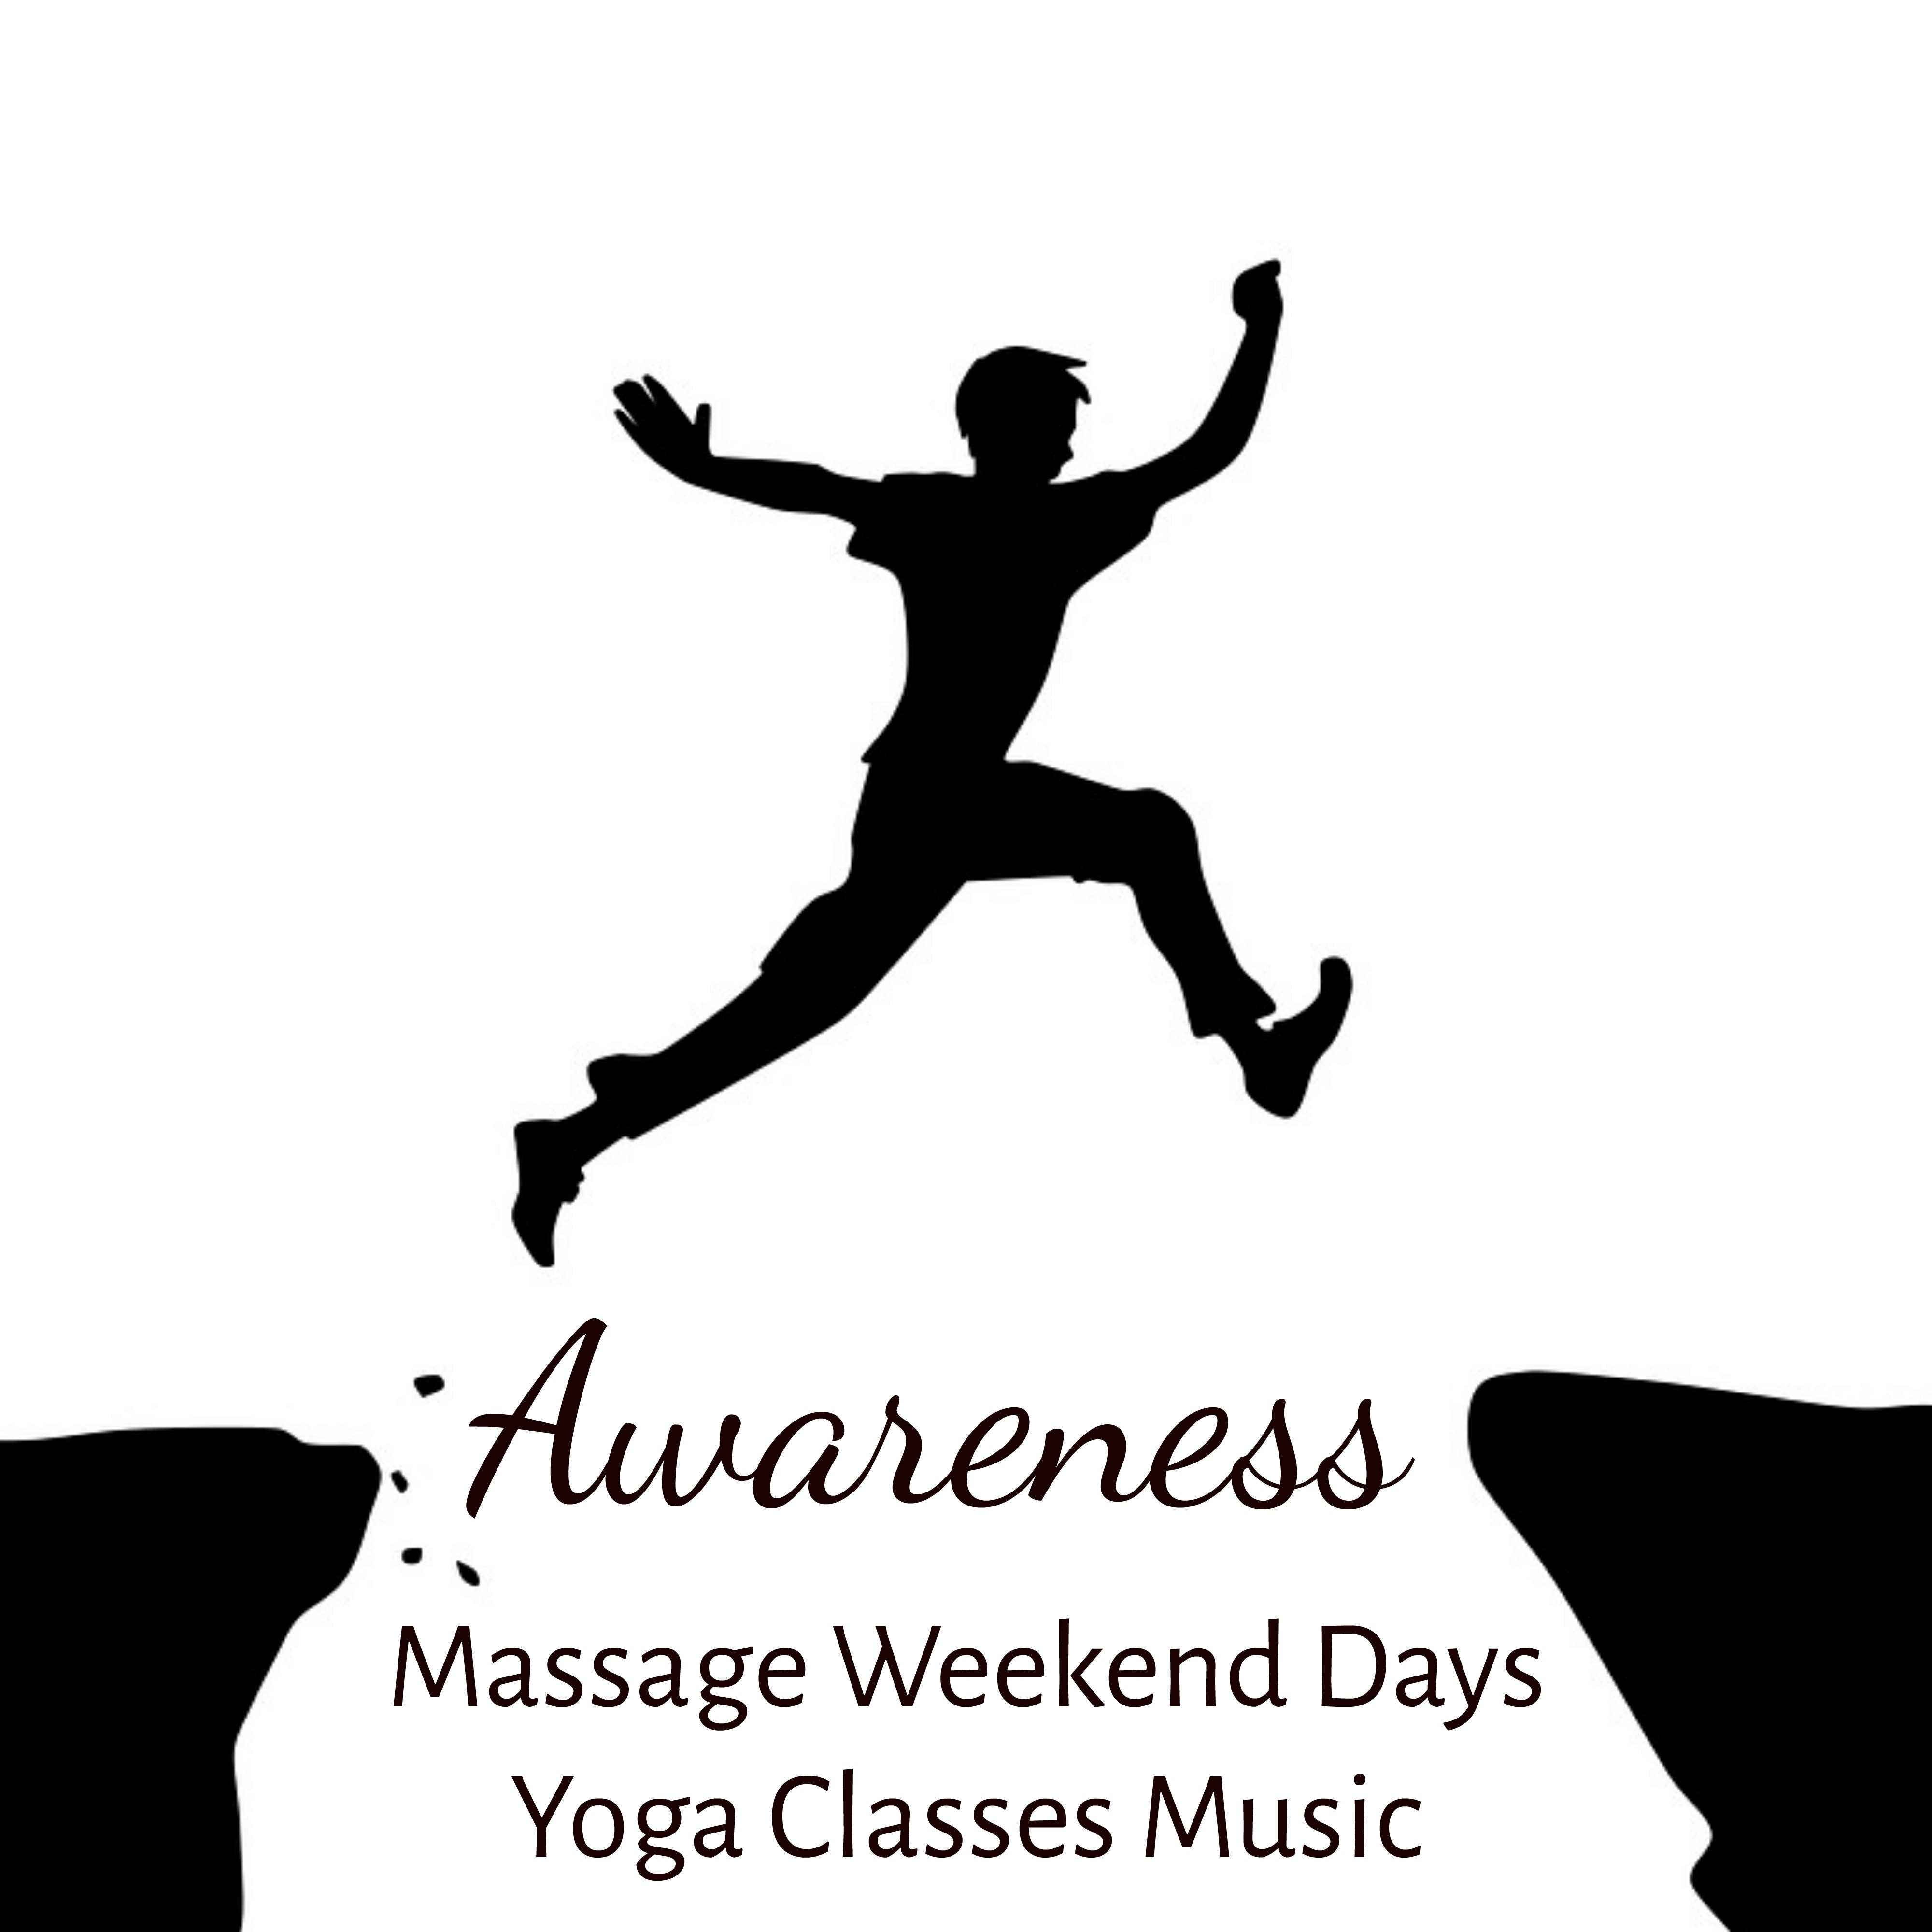 Awareness - Massage Weekend Days Yoga Classes Music for Deep Focus and Spiritual Healing